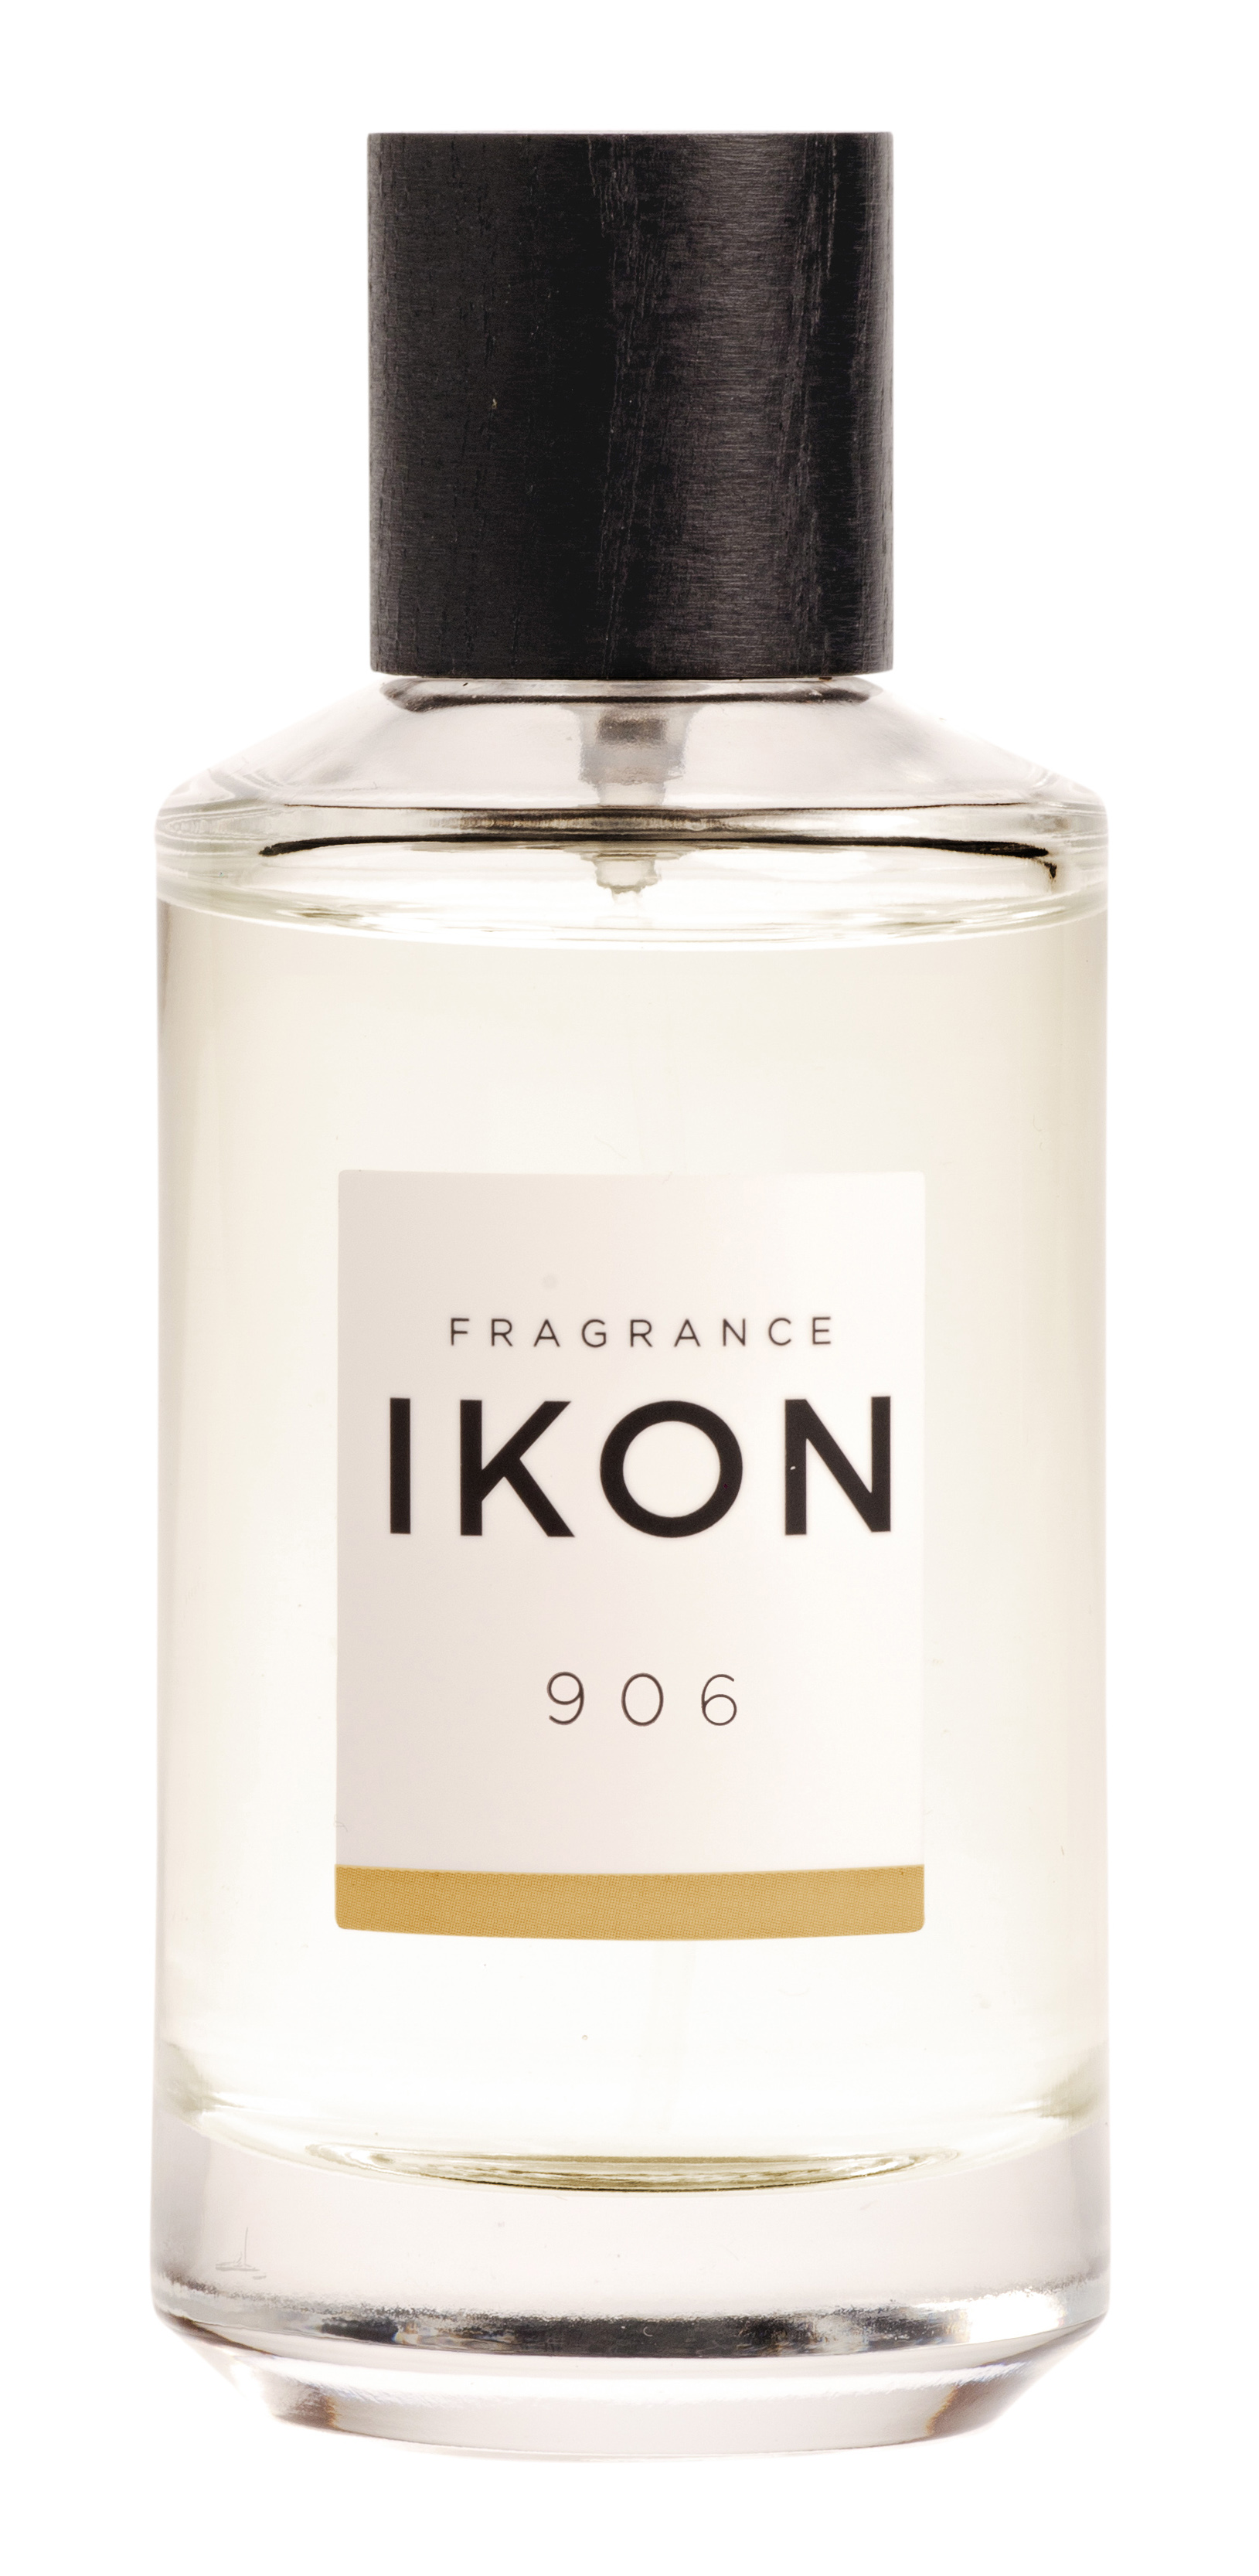 IKON 906 sustainable Eau de Parfum, World Vegan Day beauty swaps